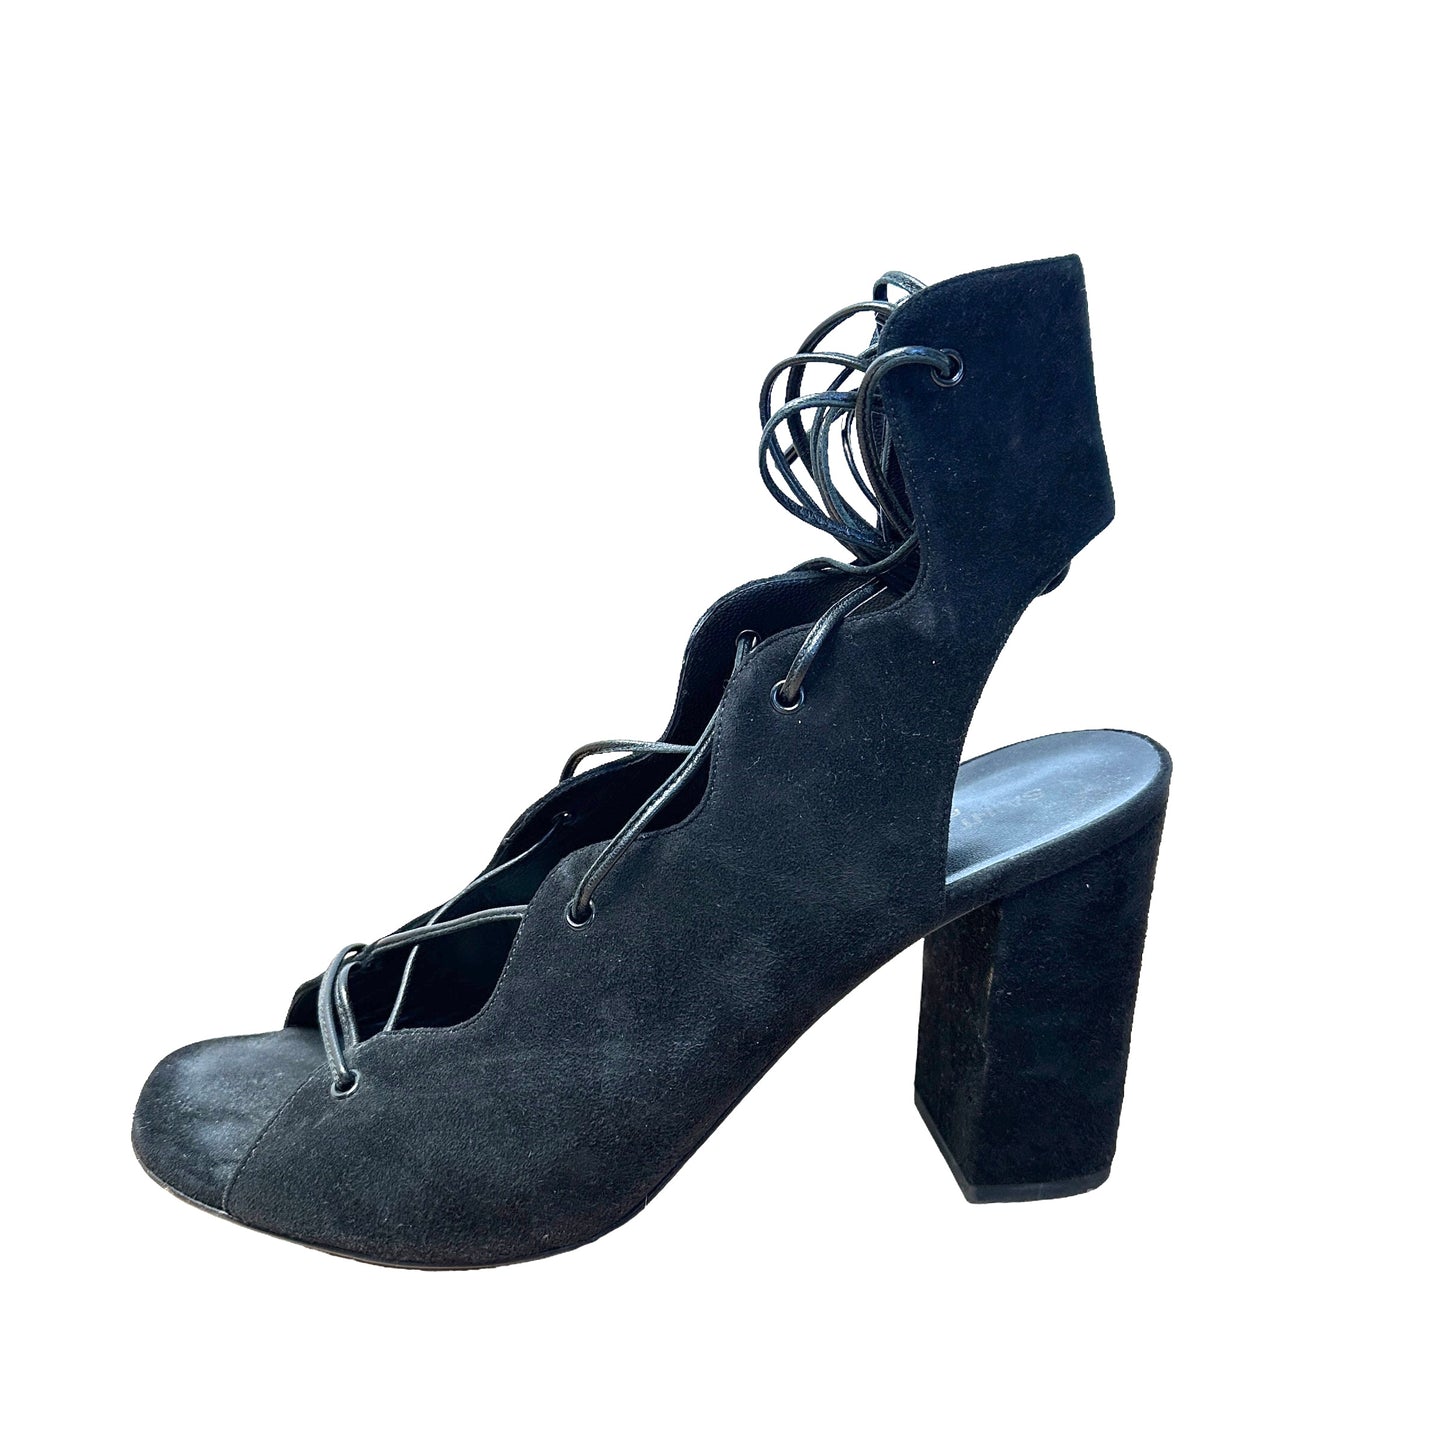 Black Suede Sandals - 9.5